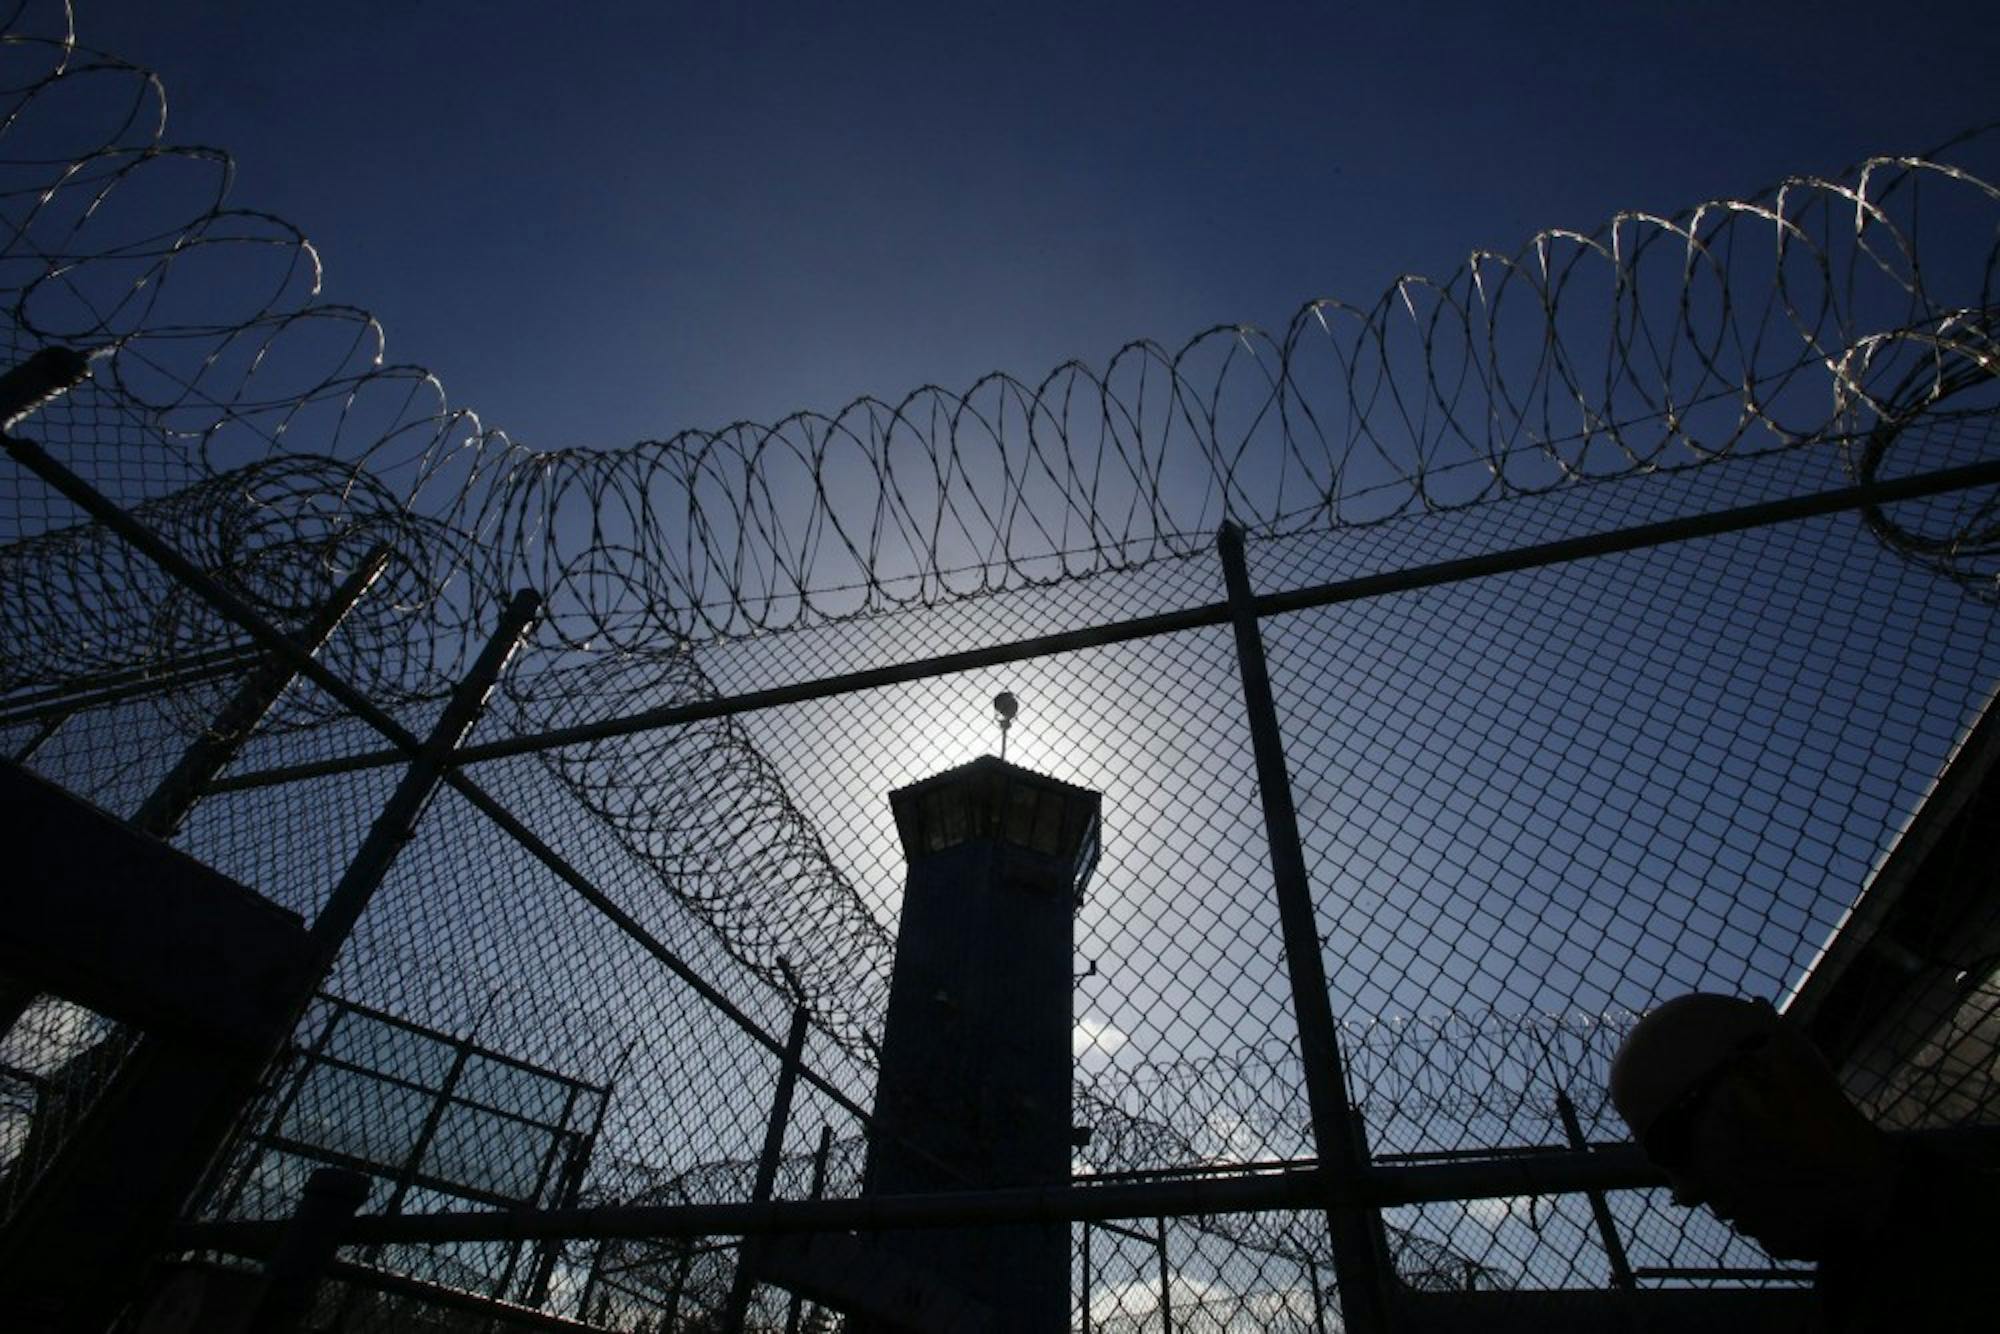 US NEWS CALIF-PRISON-HUNGERSTRIKE 2 LA